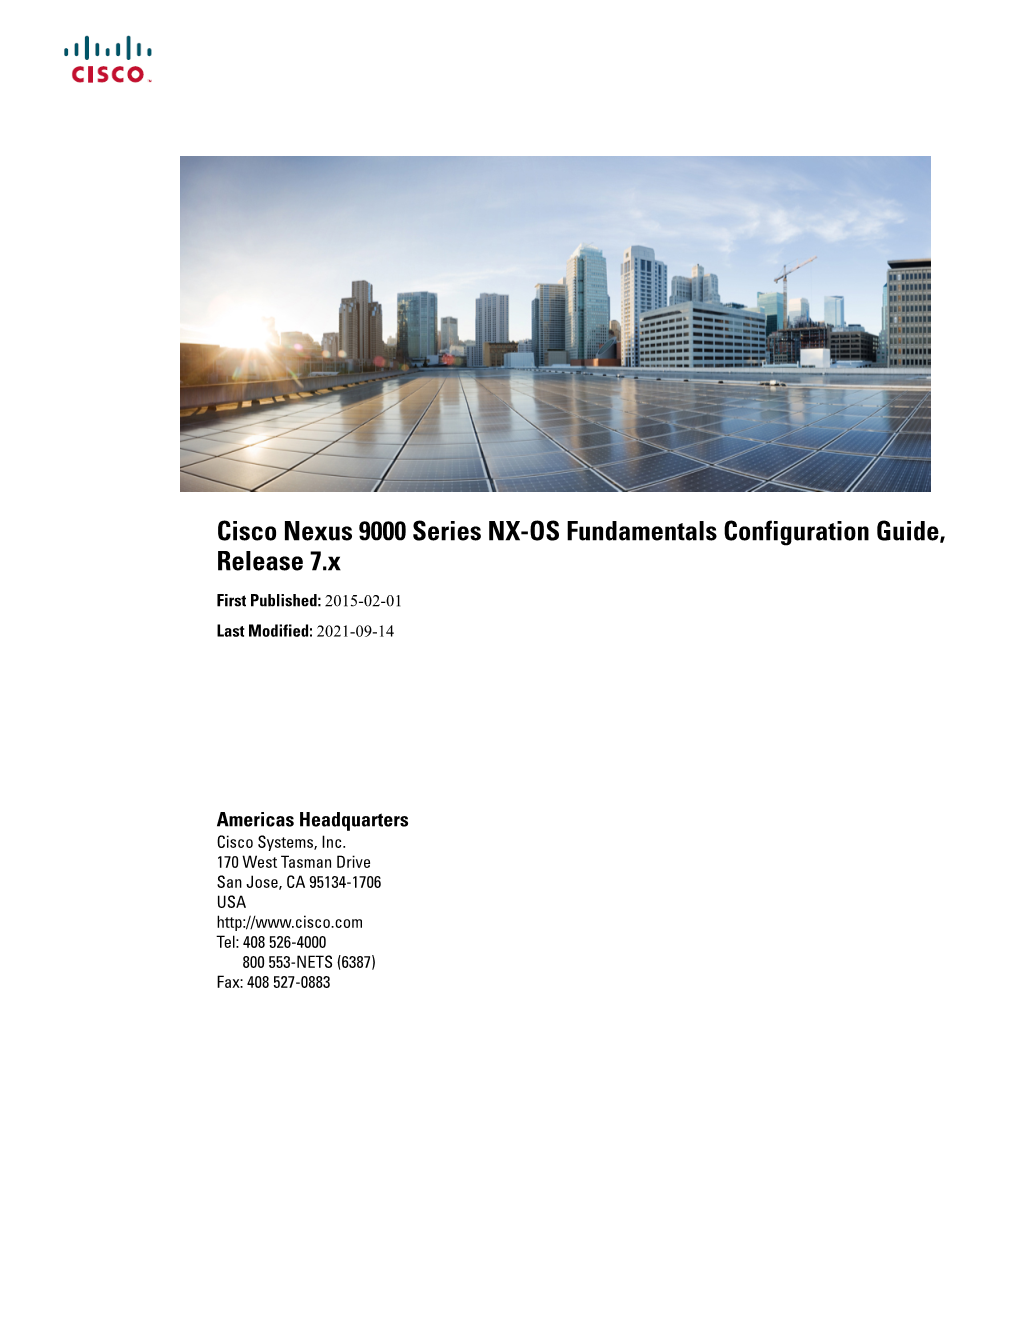 Cisco Nexus 9000 Series NX-OS Fundamentals Configuration Guide, Release 7.X